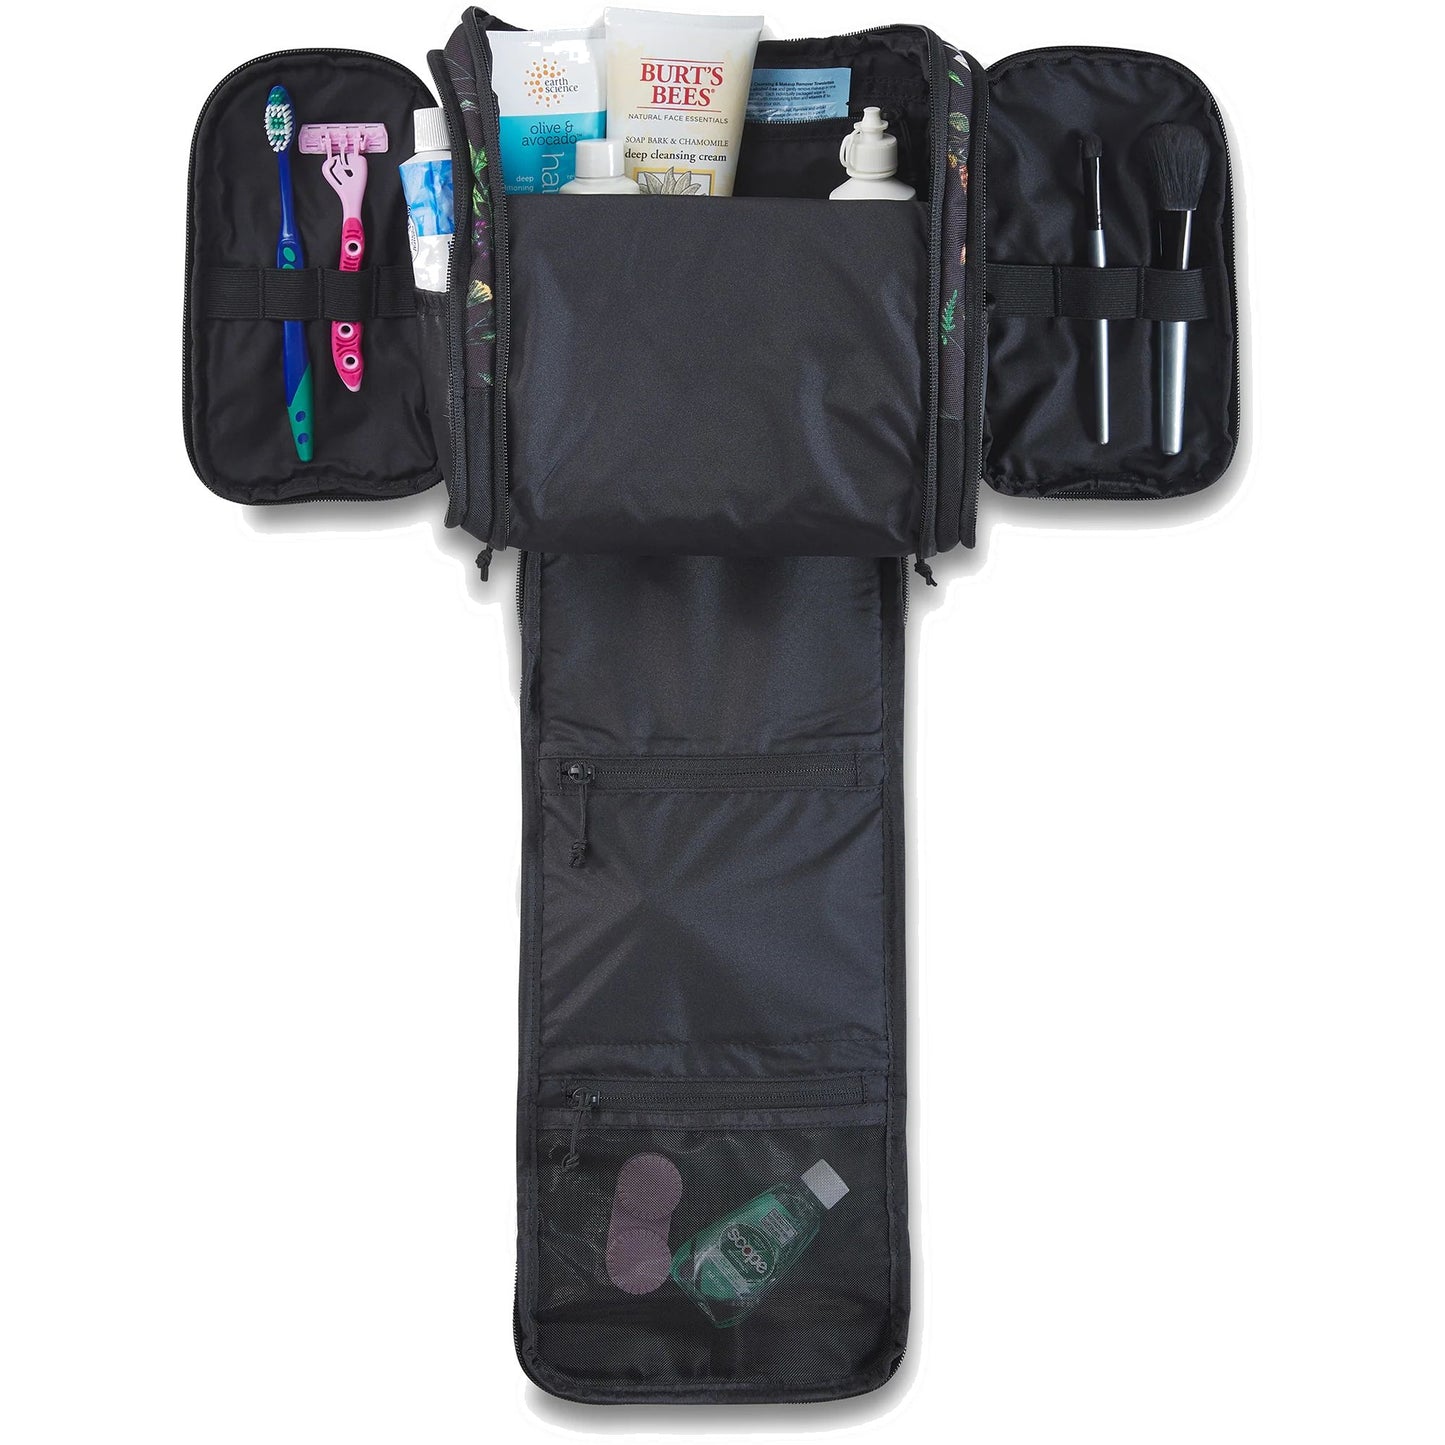 Dakine Daybreak Travel Kit L Poppy Griffin OS Travel Bags